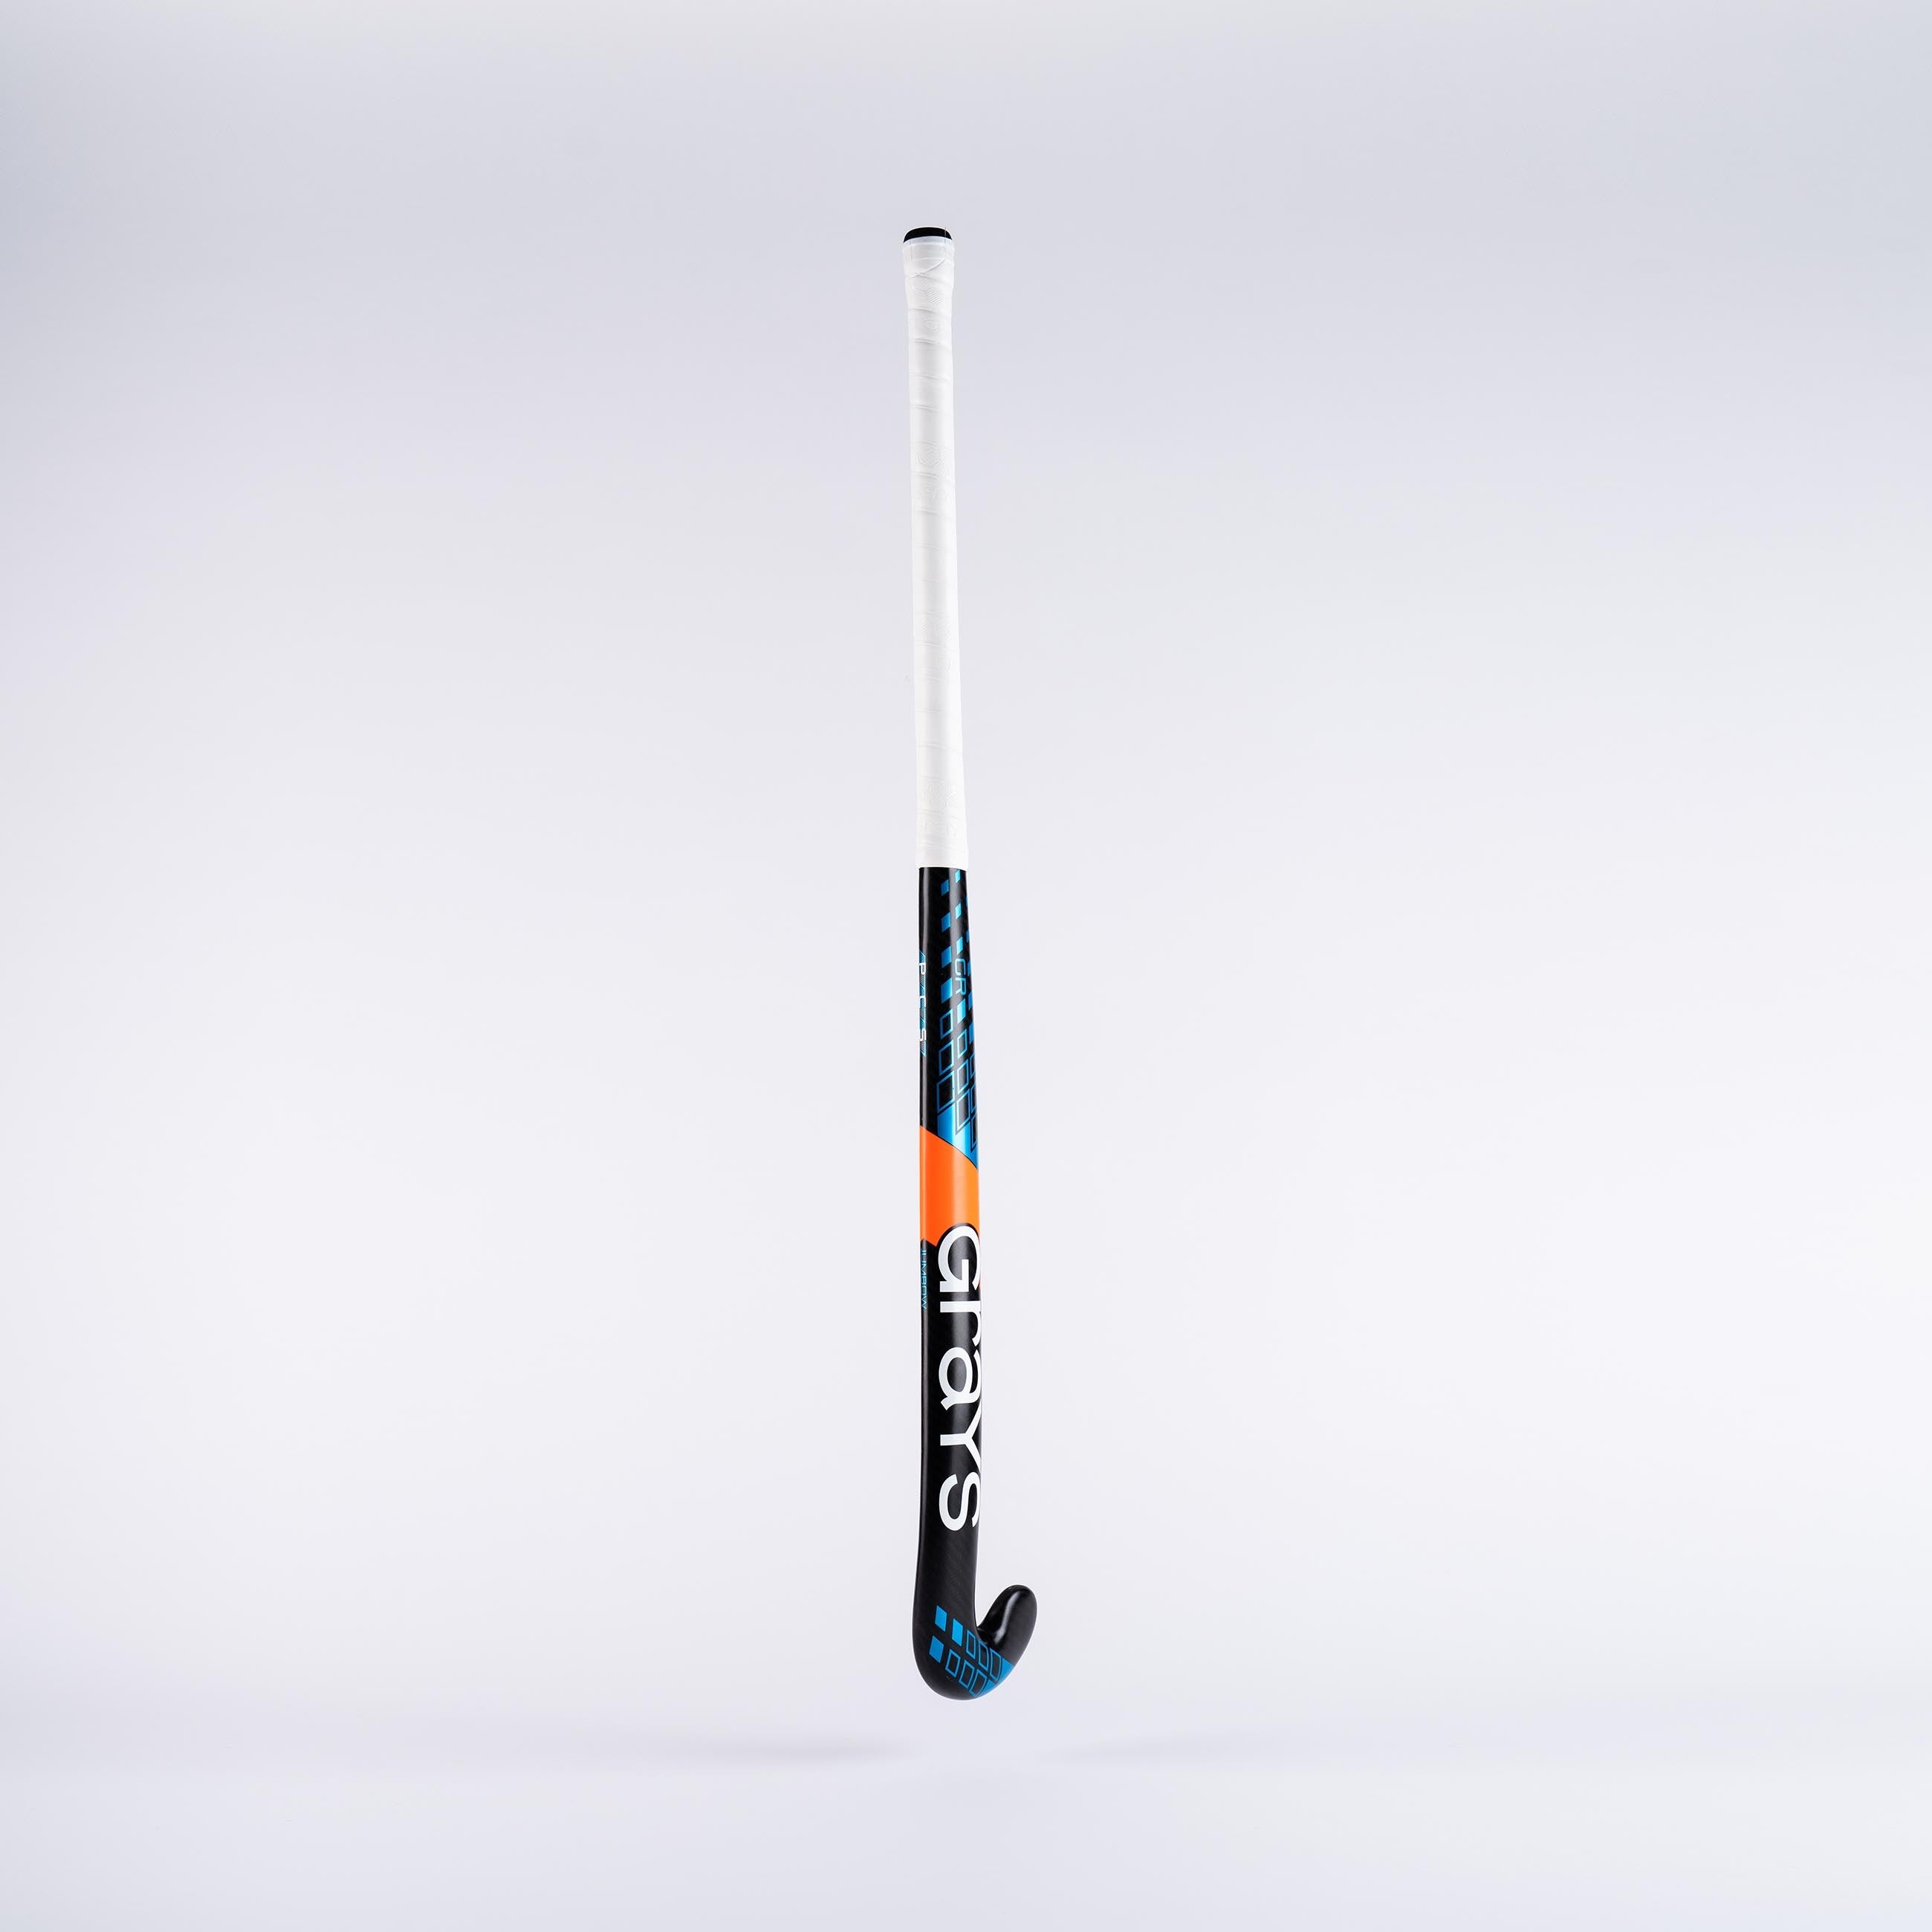 HABQ23Composite Sticks GR5000 Jumbow Maxi 45 Black & Blue, 1 Angle